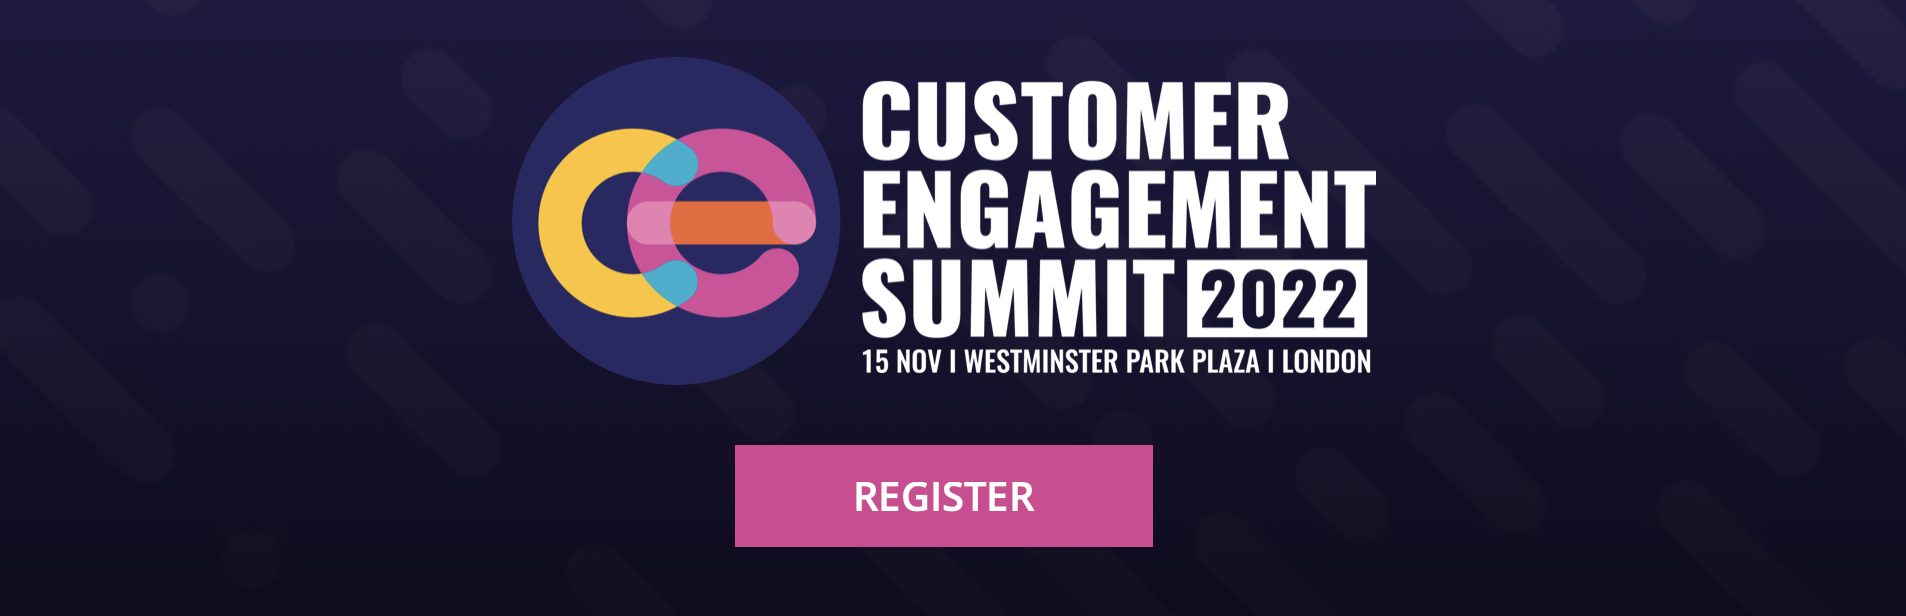 Customer Engagement Summit 2022